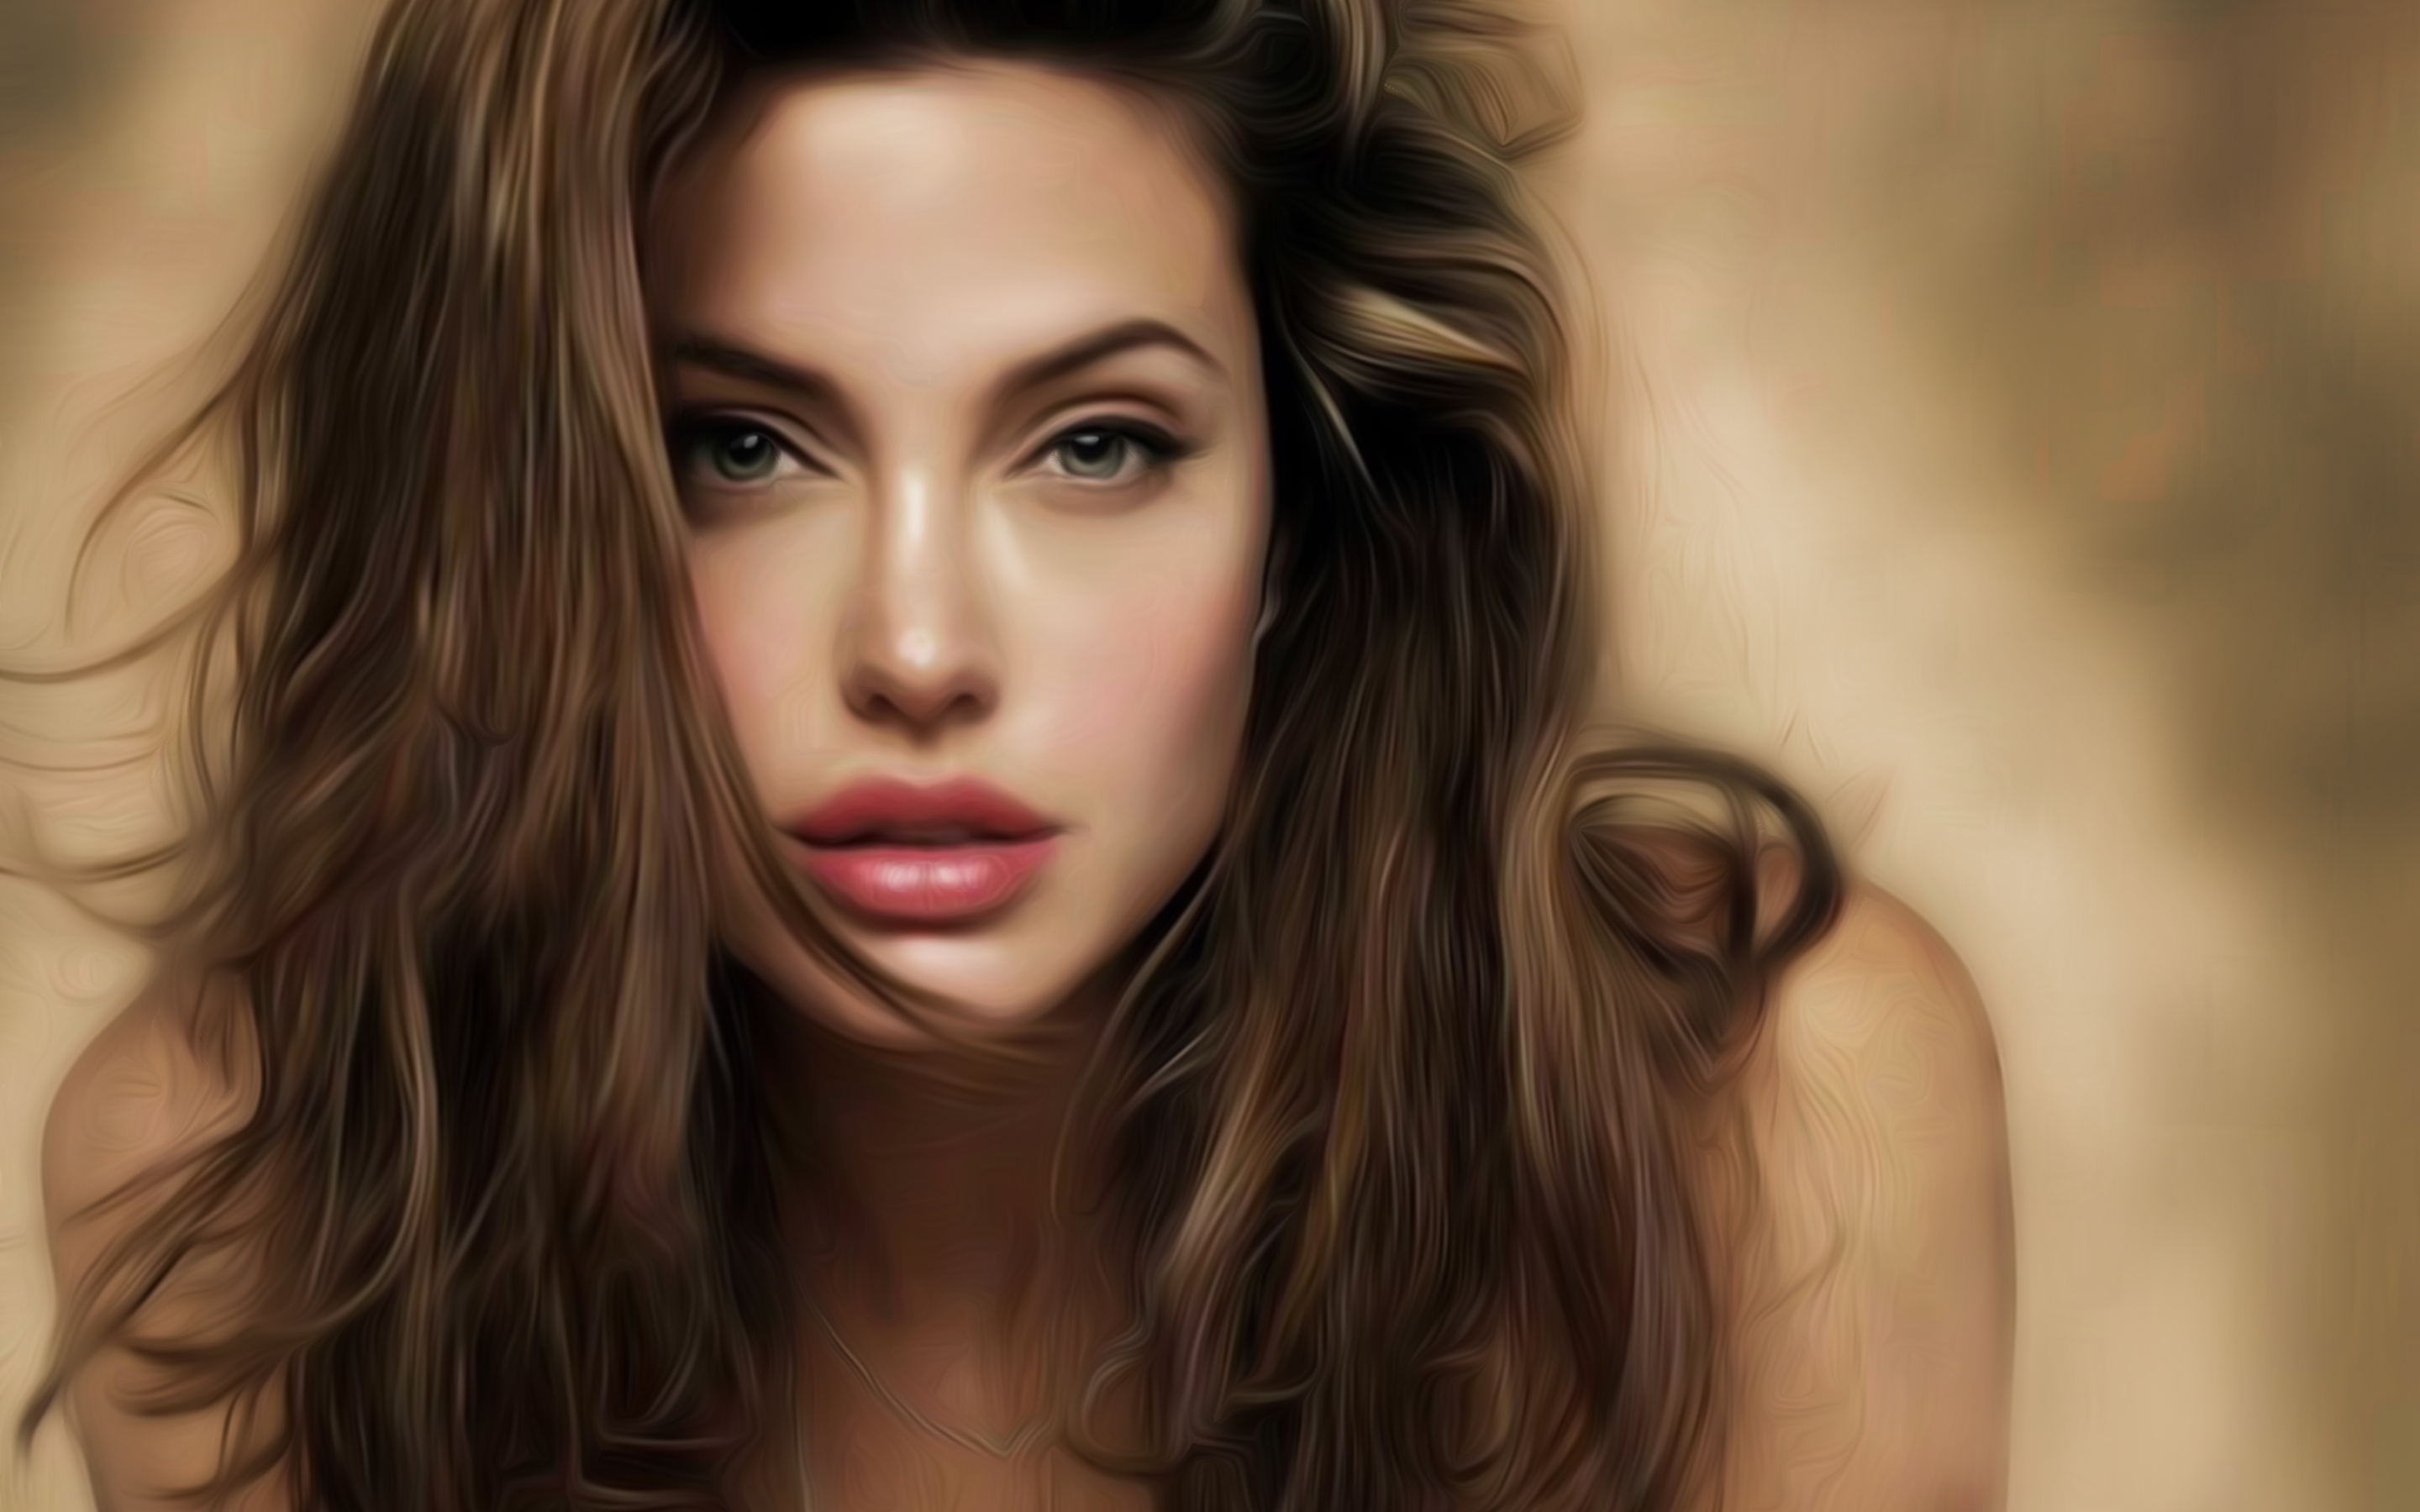 Angelina Jolie Look Art for 2880 x 1800 Retina Display resolution